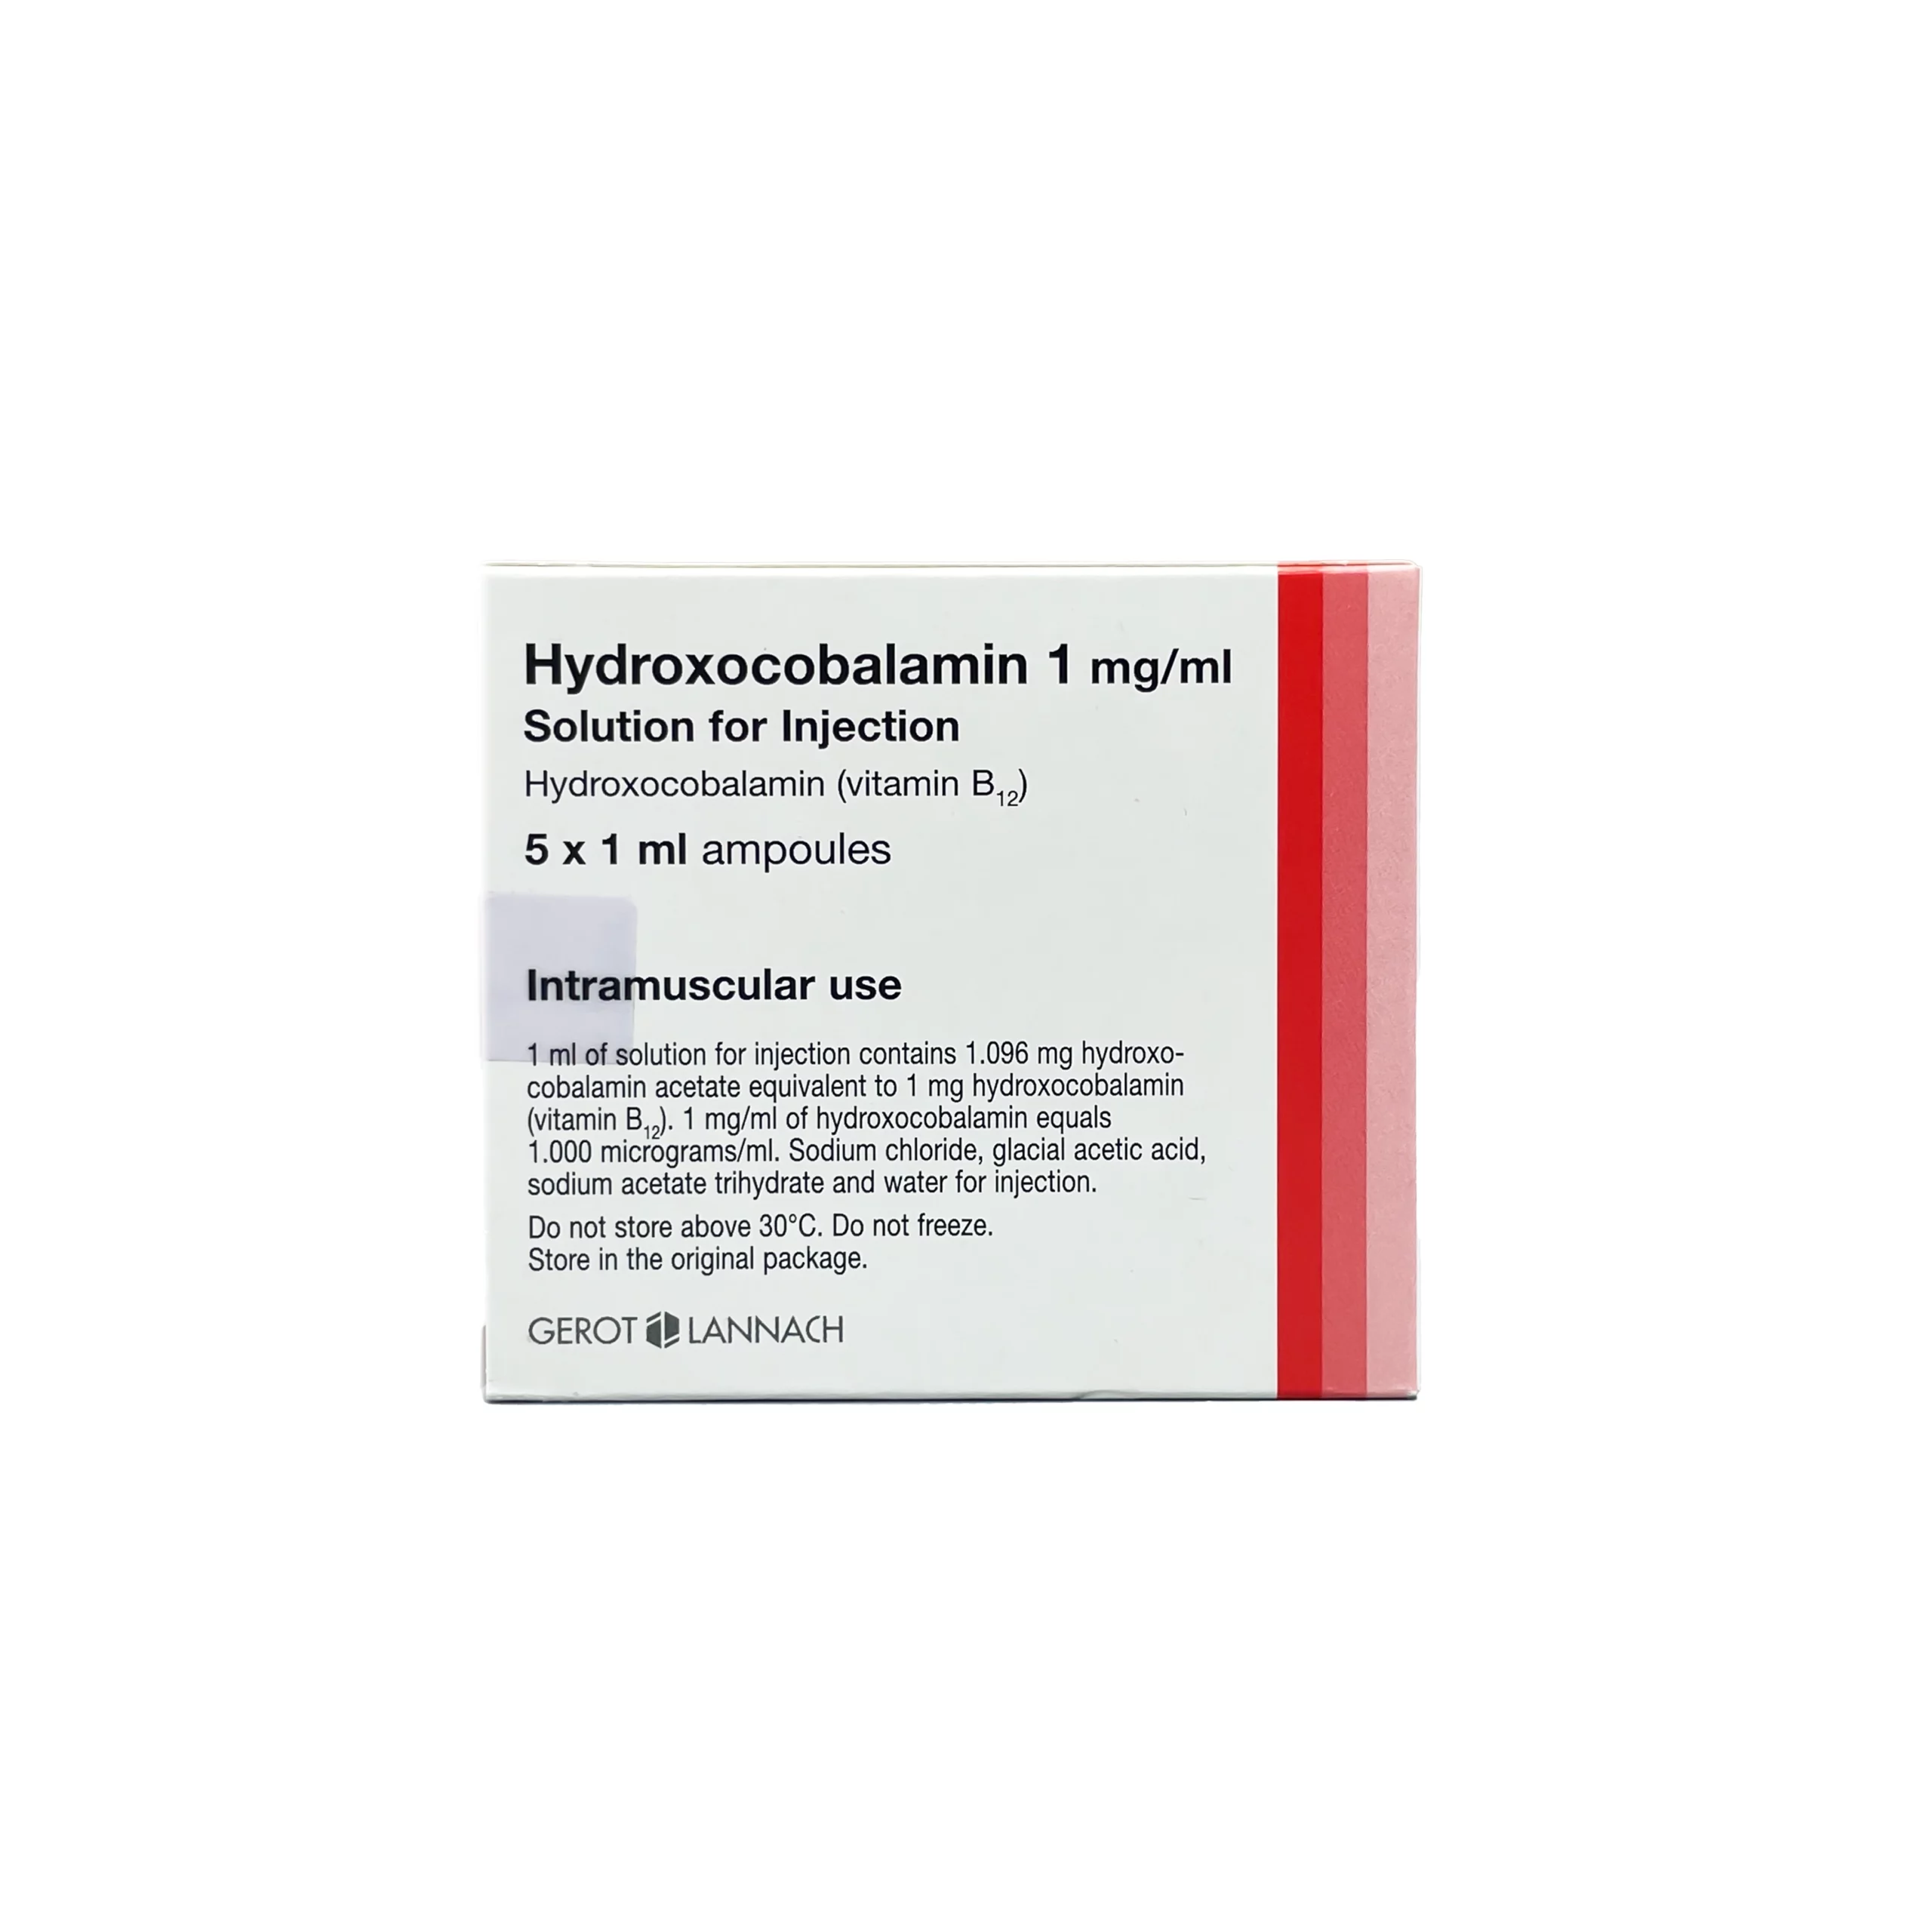 Hydroxocobalmin (VitaminB12)